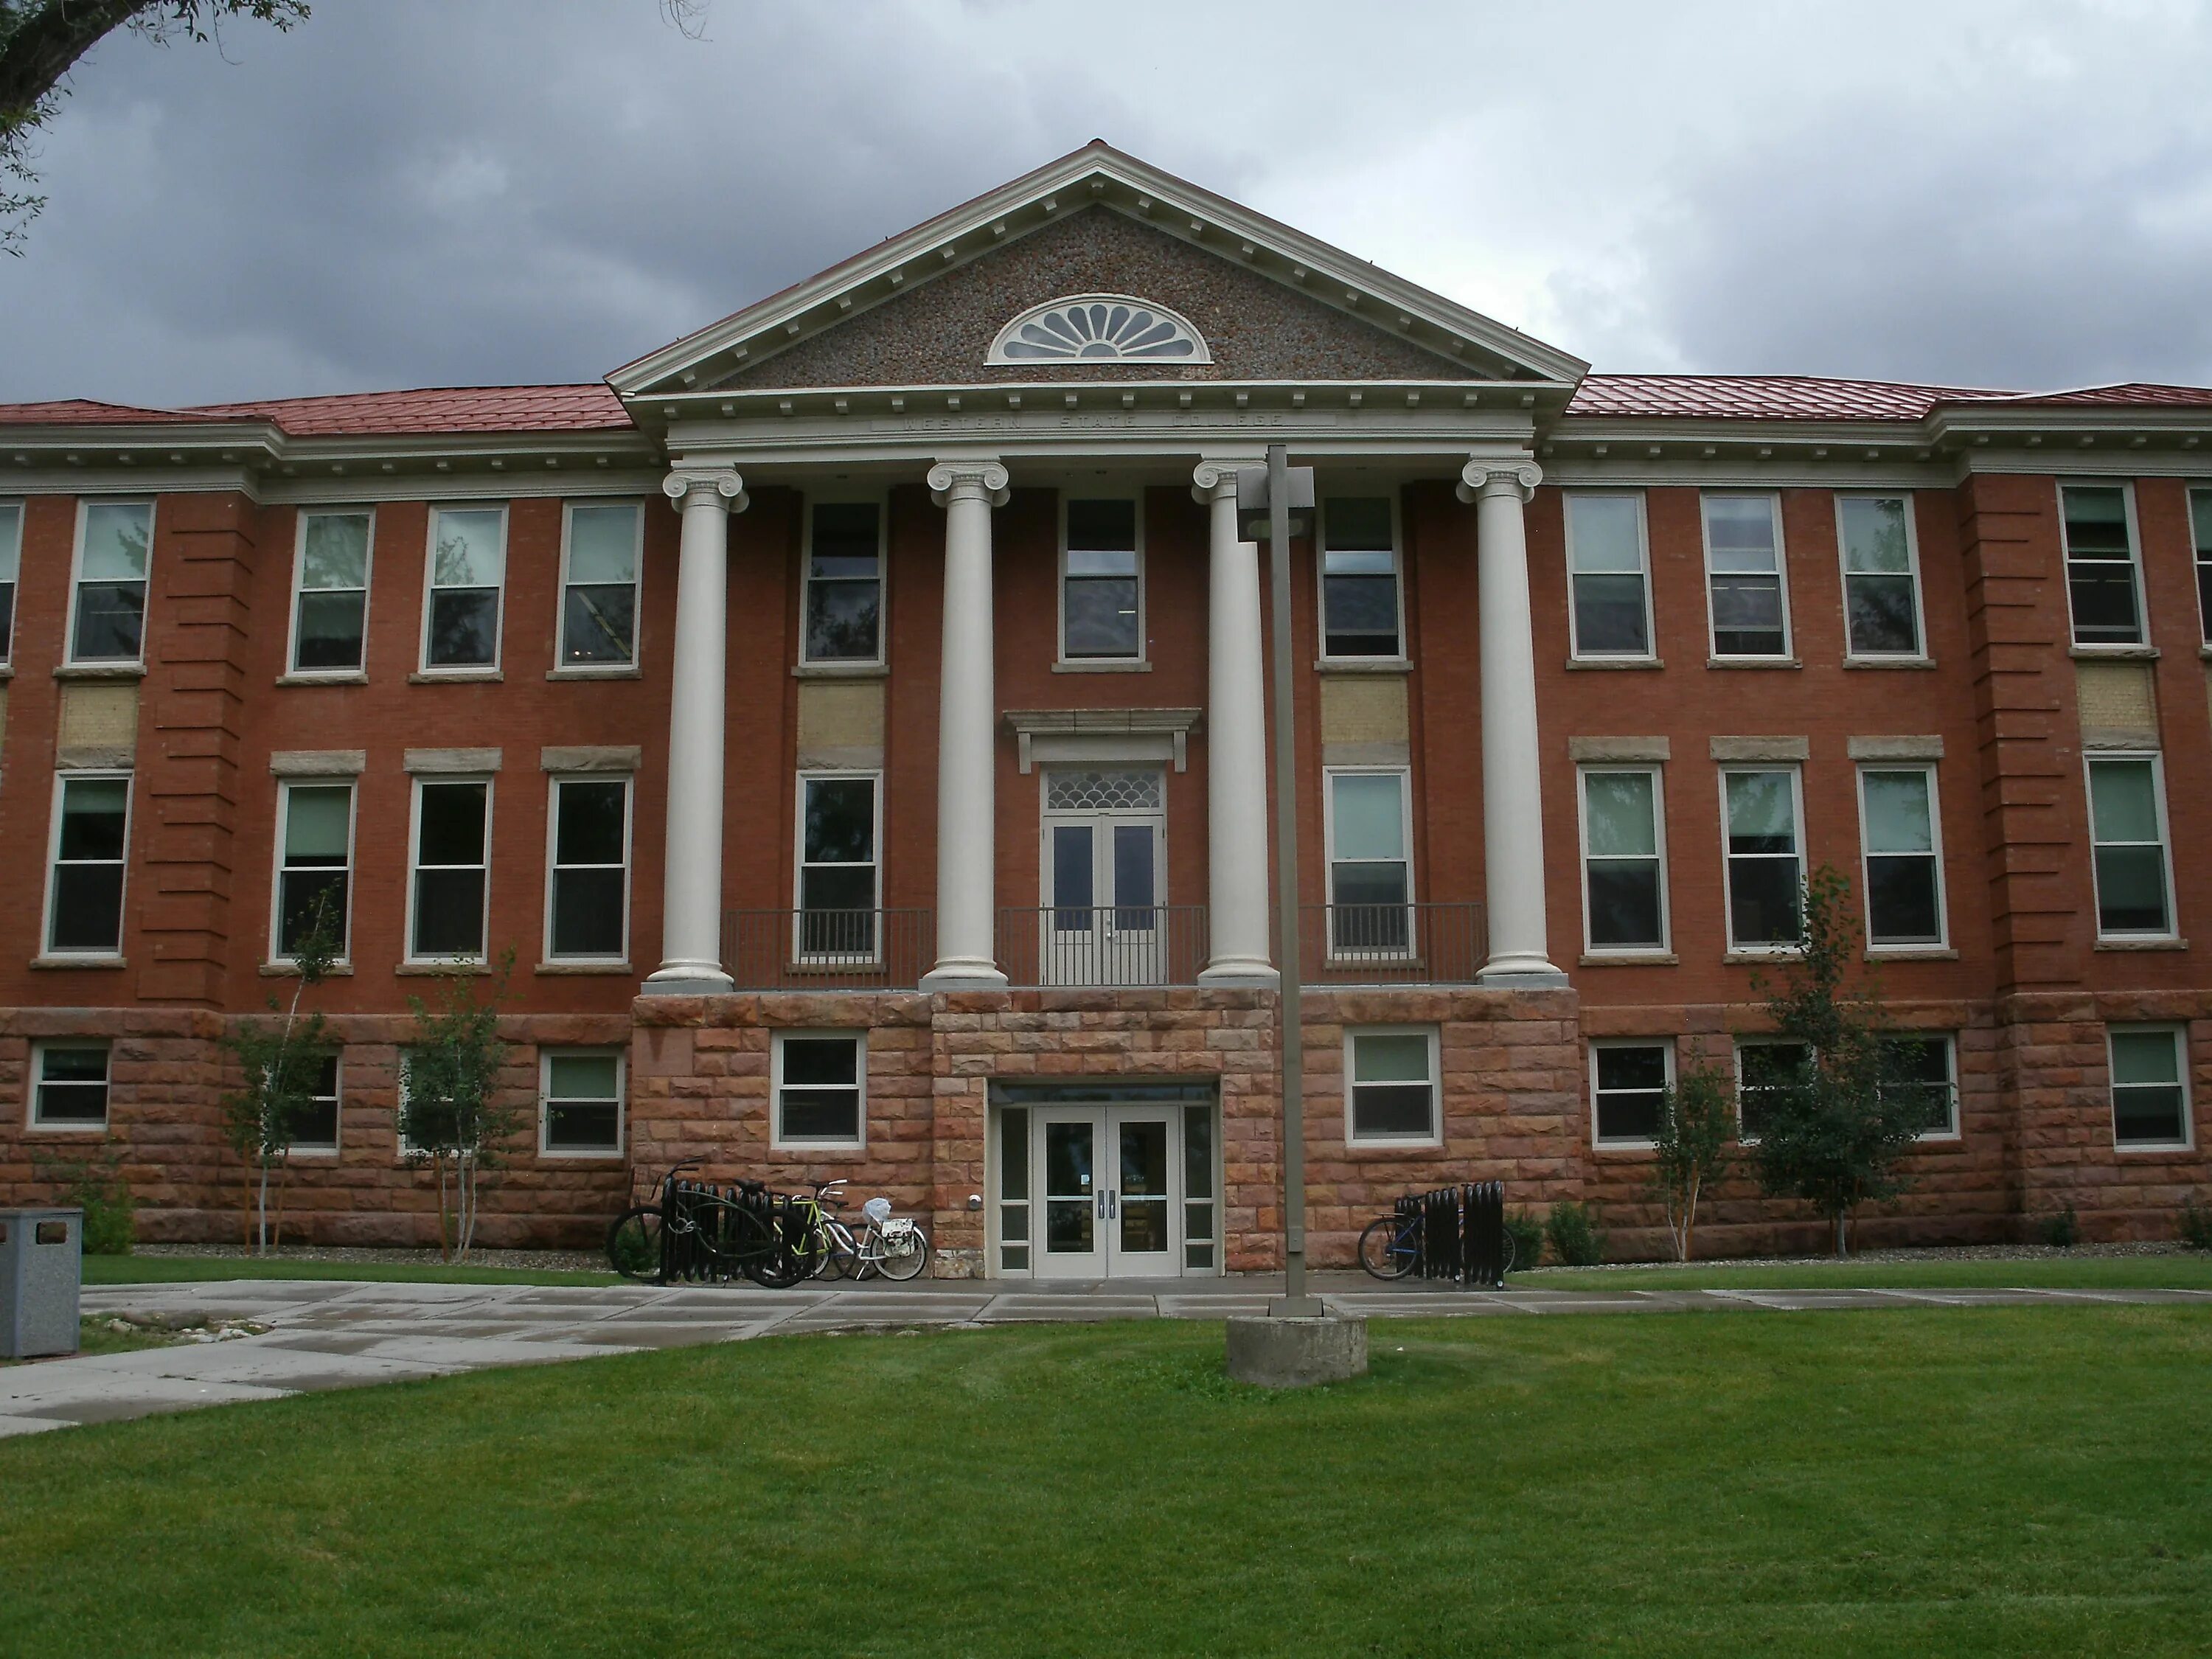 State school in britain. Университет Колорадо США. Старшая школа в Америке здание. Colorado США колледж. Американская школа снаружи.